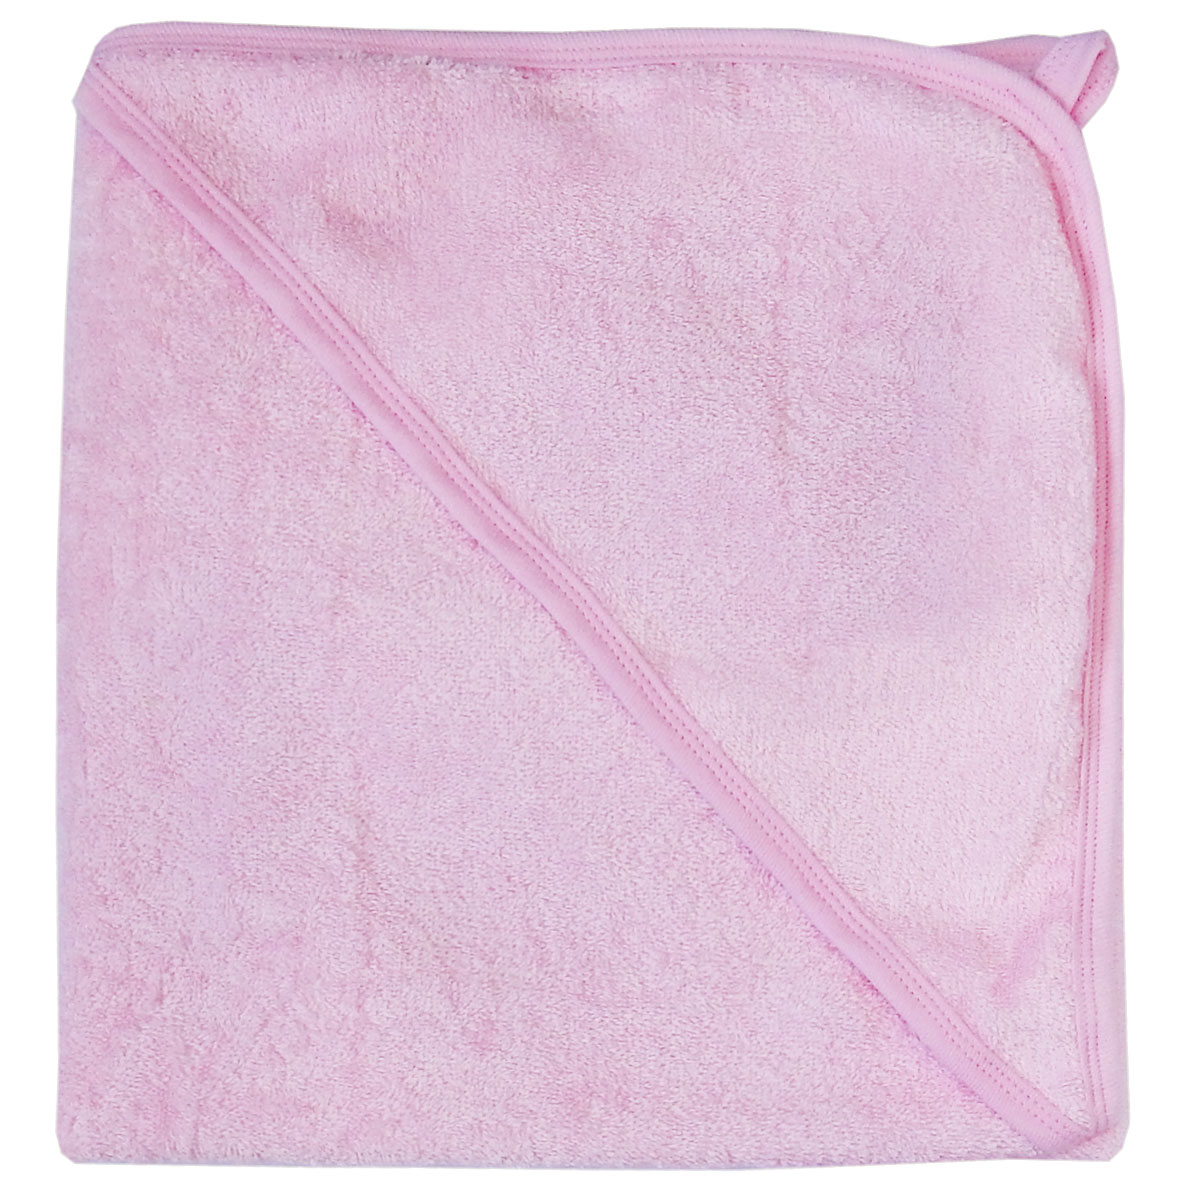 Полотенце Папитто для купания с уголком 100х100 Розовый полотенце уголок cherir бегемотик 100х100 см